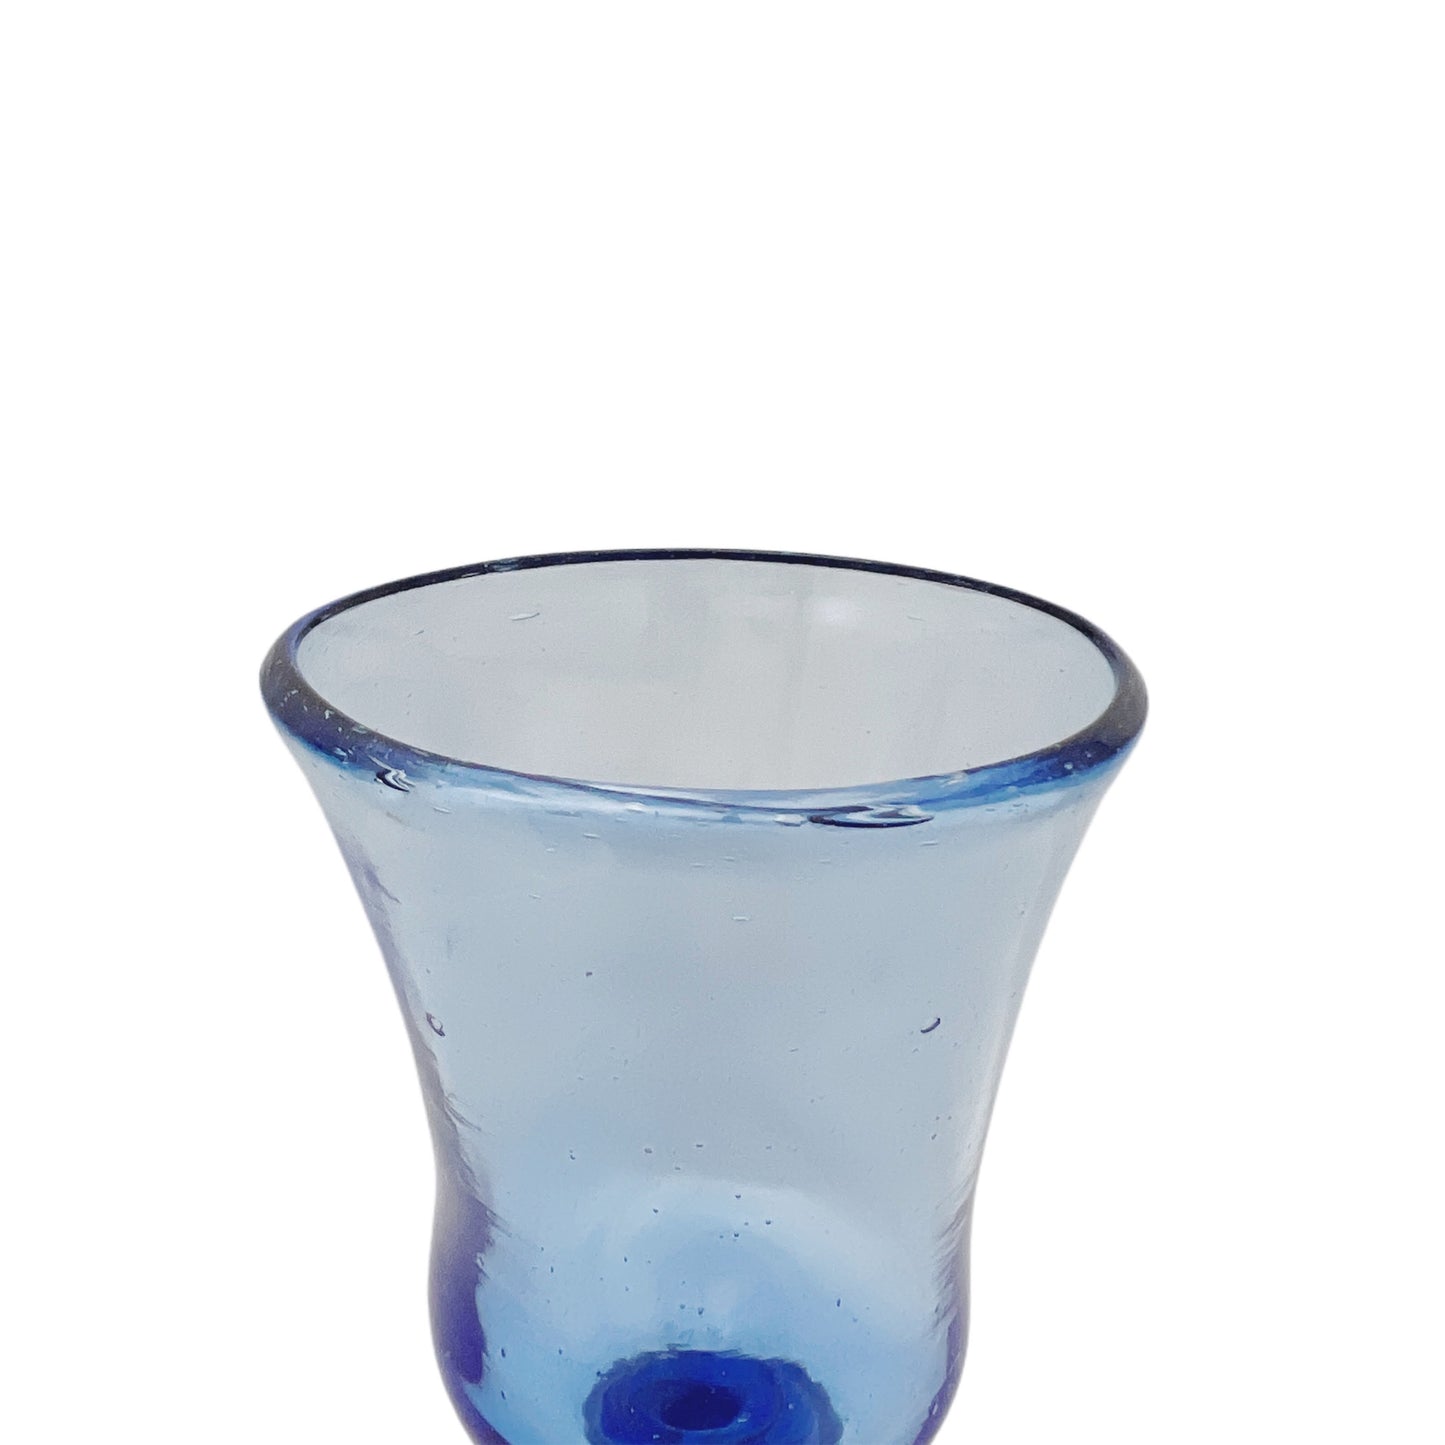 【La Soufflerie】ワイングラス White Wine Glass Light Blue